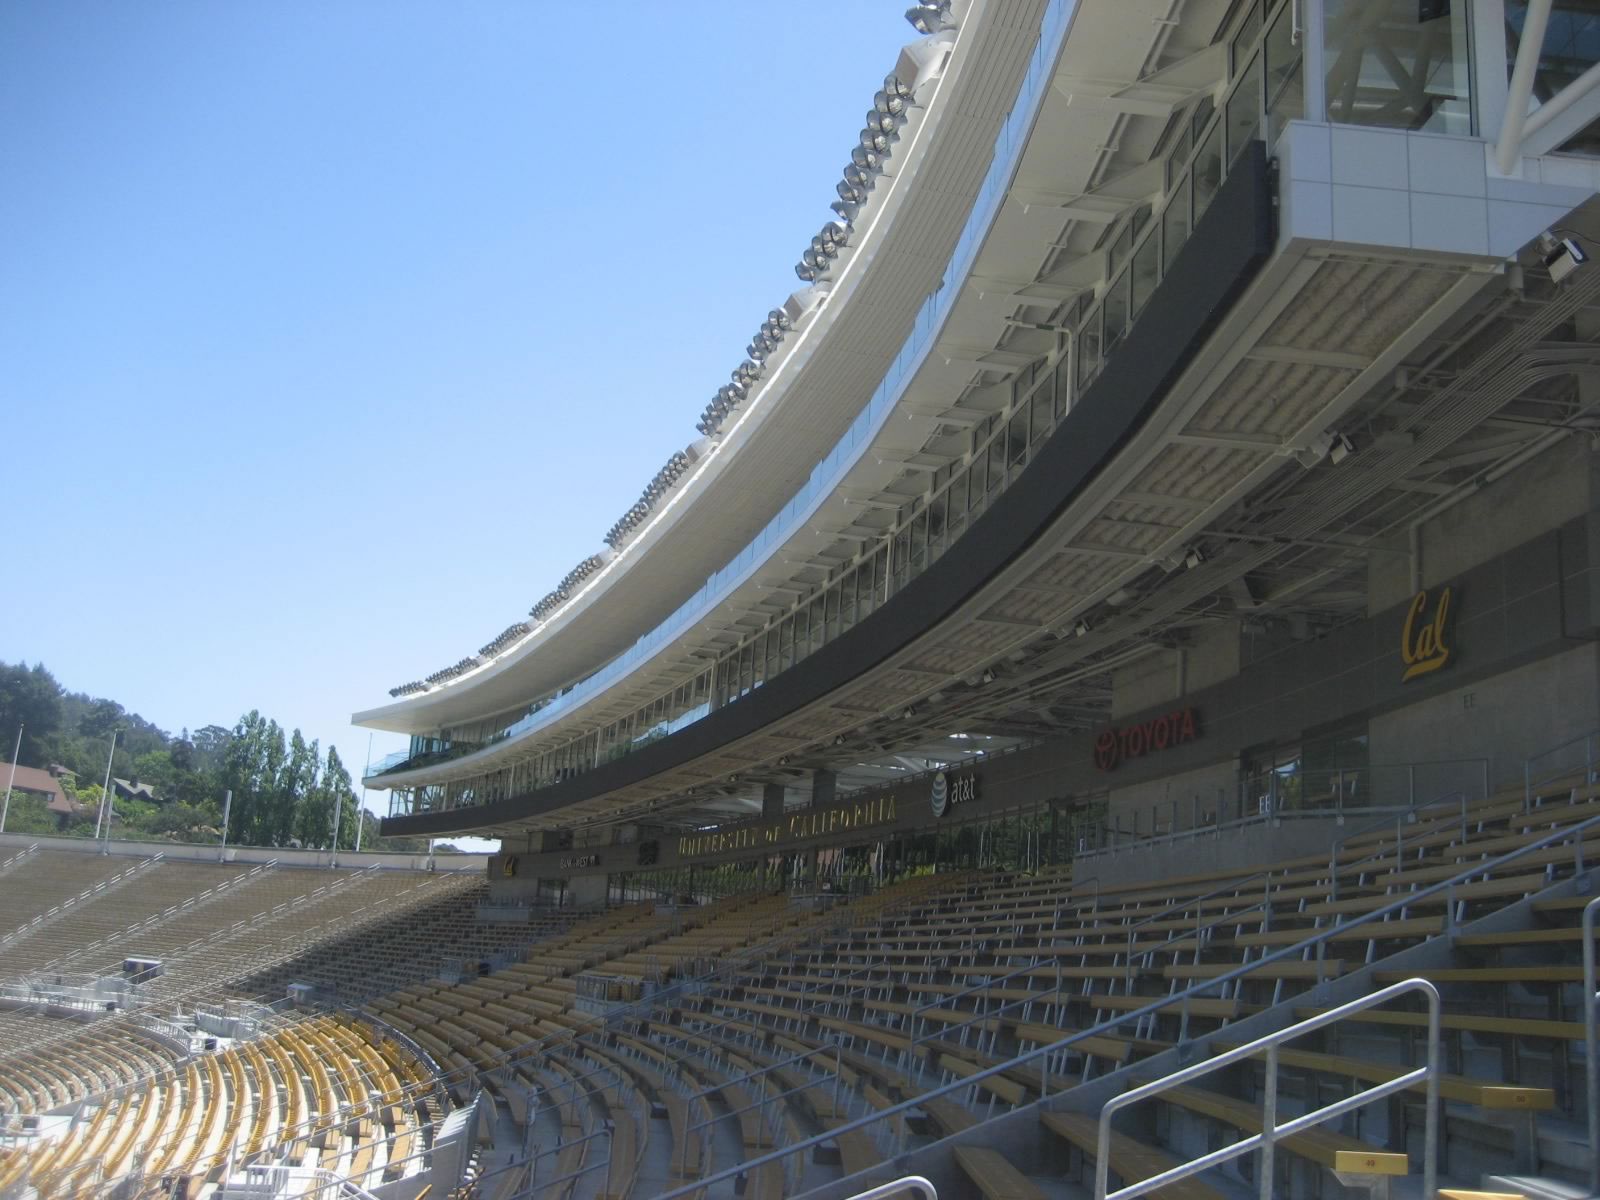 California Memorial Stadium Seating Chart